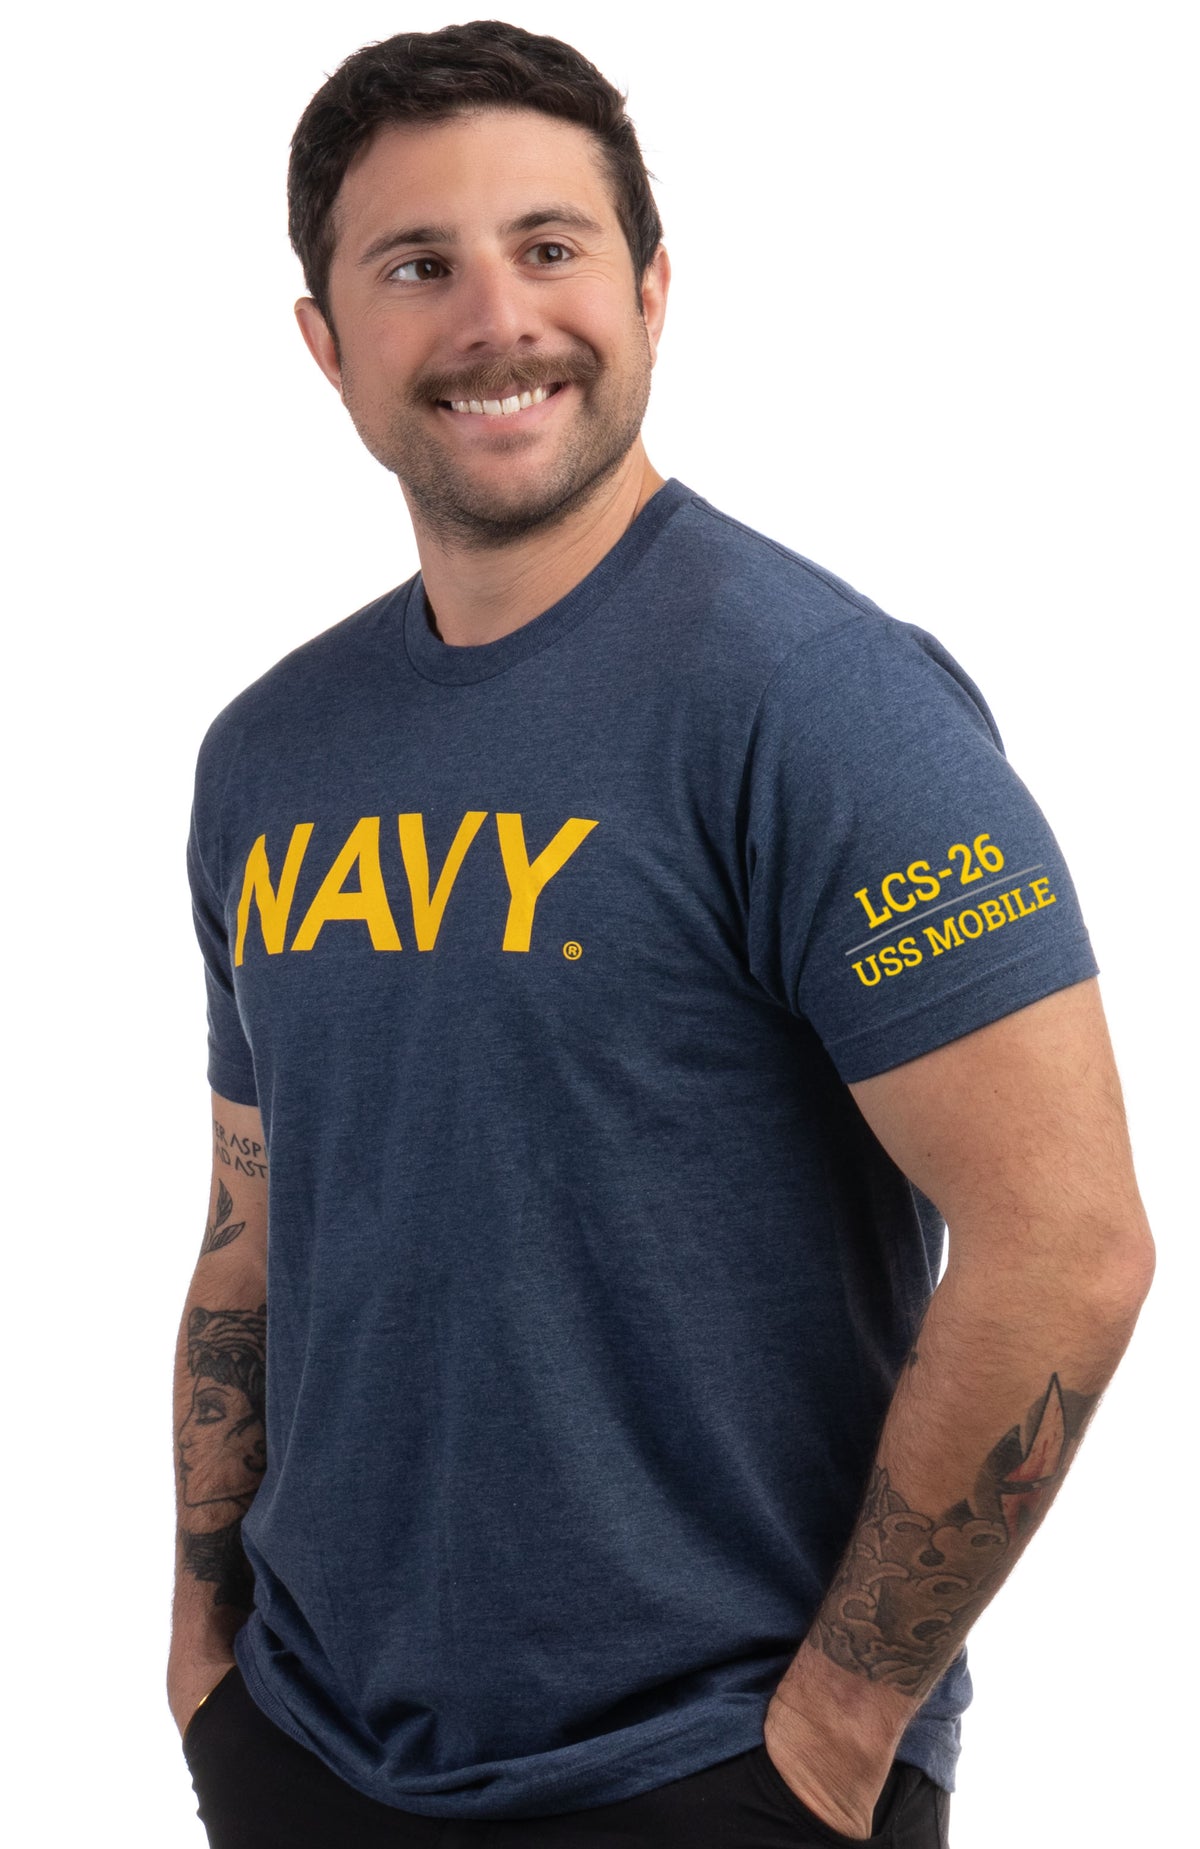 USS Mobile, LCS-26 | U.S. Navy Sailor Veteran USN United States Naval T-shirt for Men Women